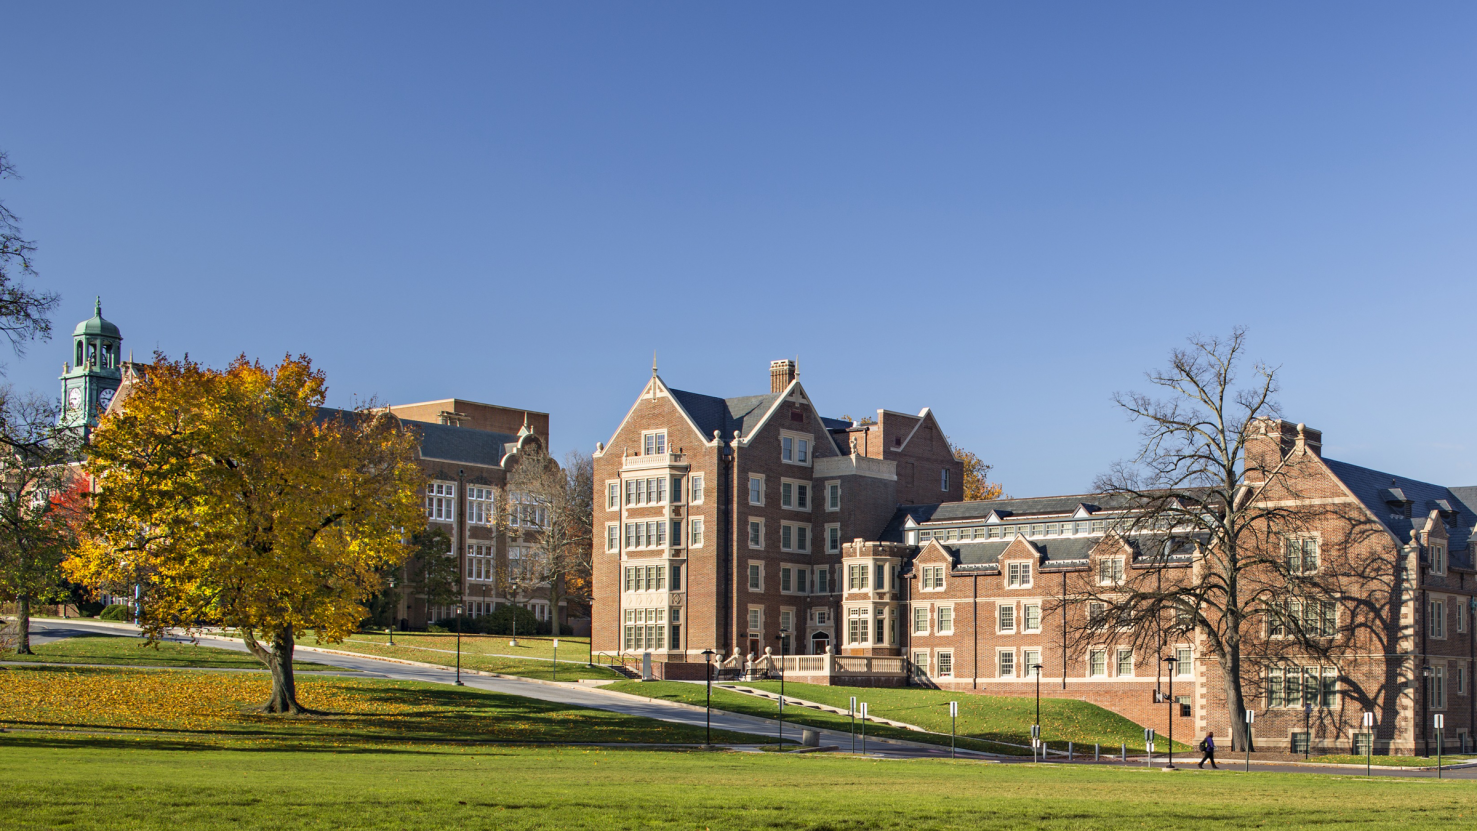 Exterior View of campus buildings